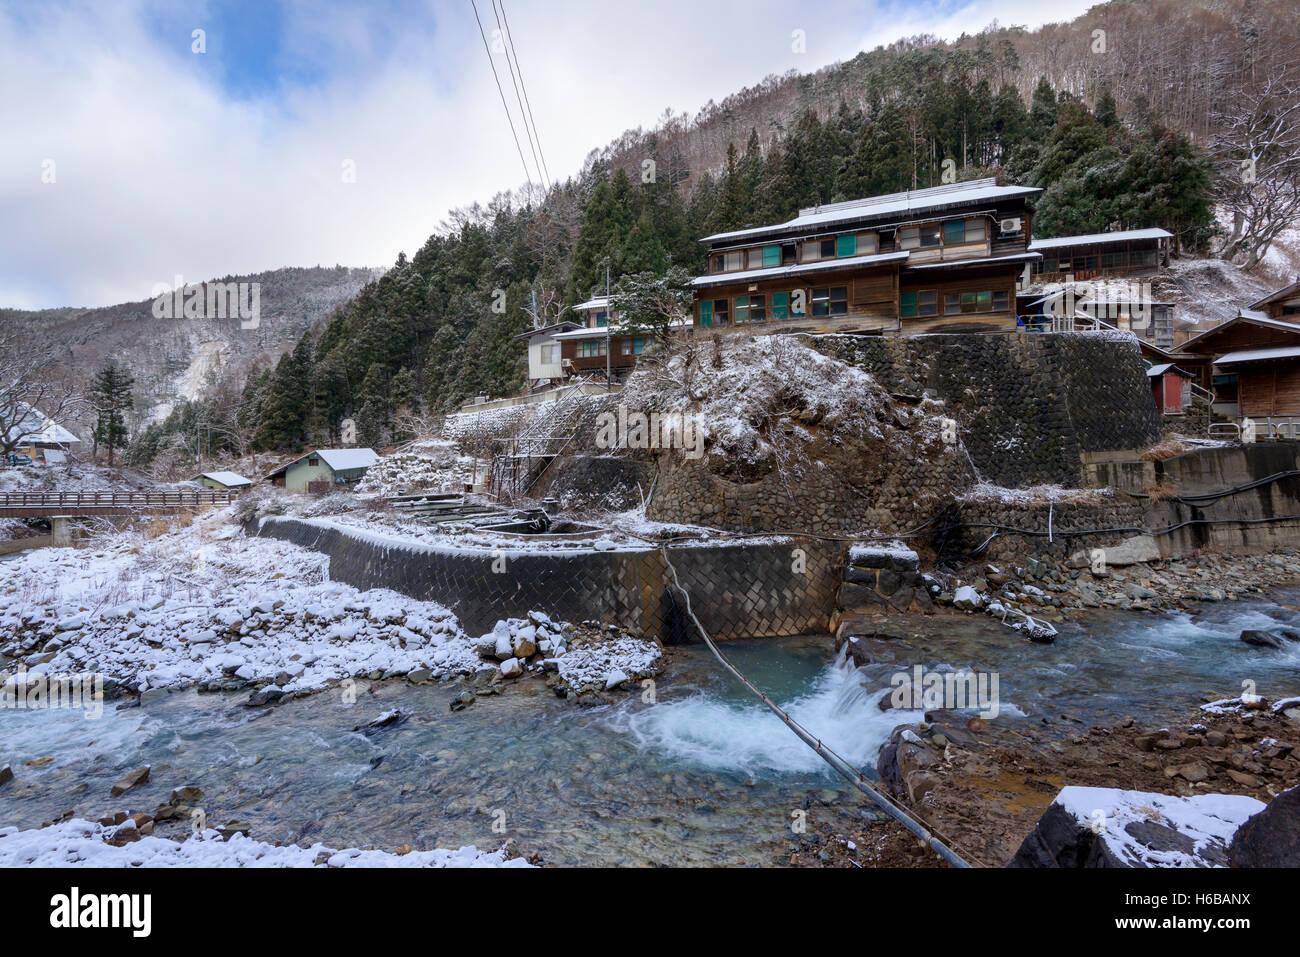 Nagano, Japan - 26. Dezember 2015: Korakukan in der Nähe von Snow Monkey Park, Yamanouchi, Japan Ryokan. Stockfoto